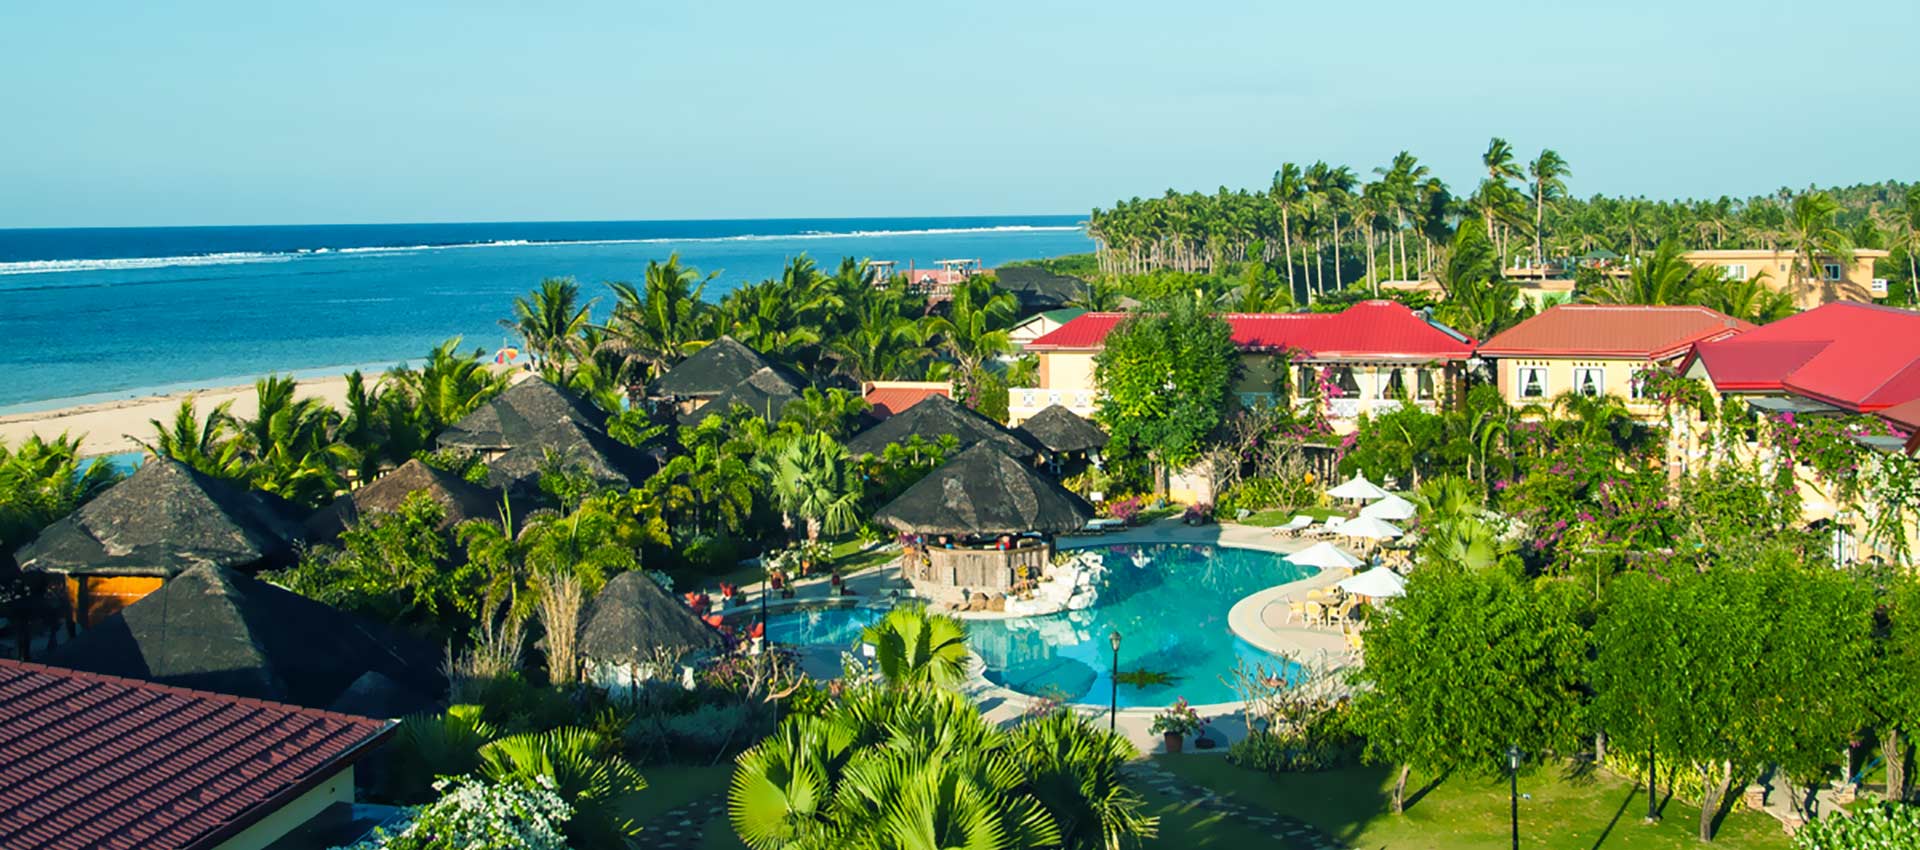 Puerto Del Sol Beach Resort / Bolinao, Pangasinan